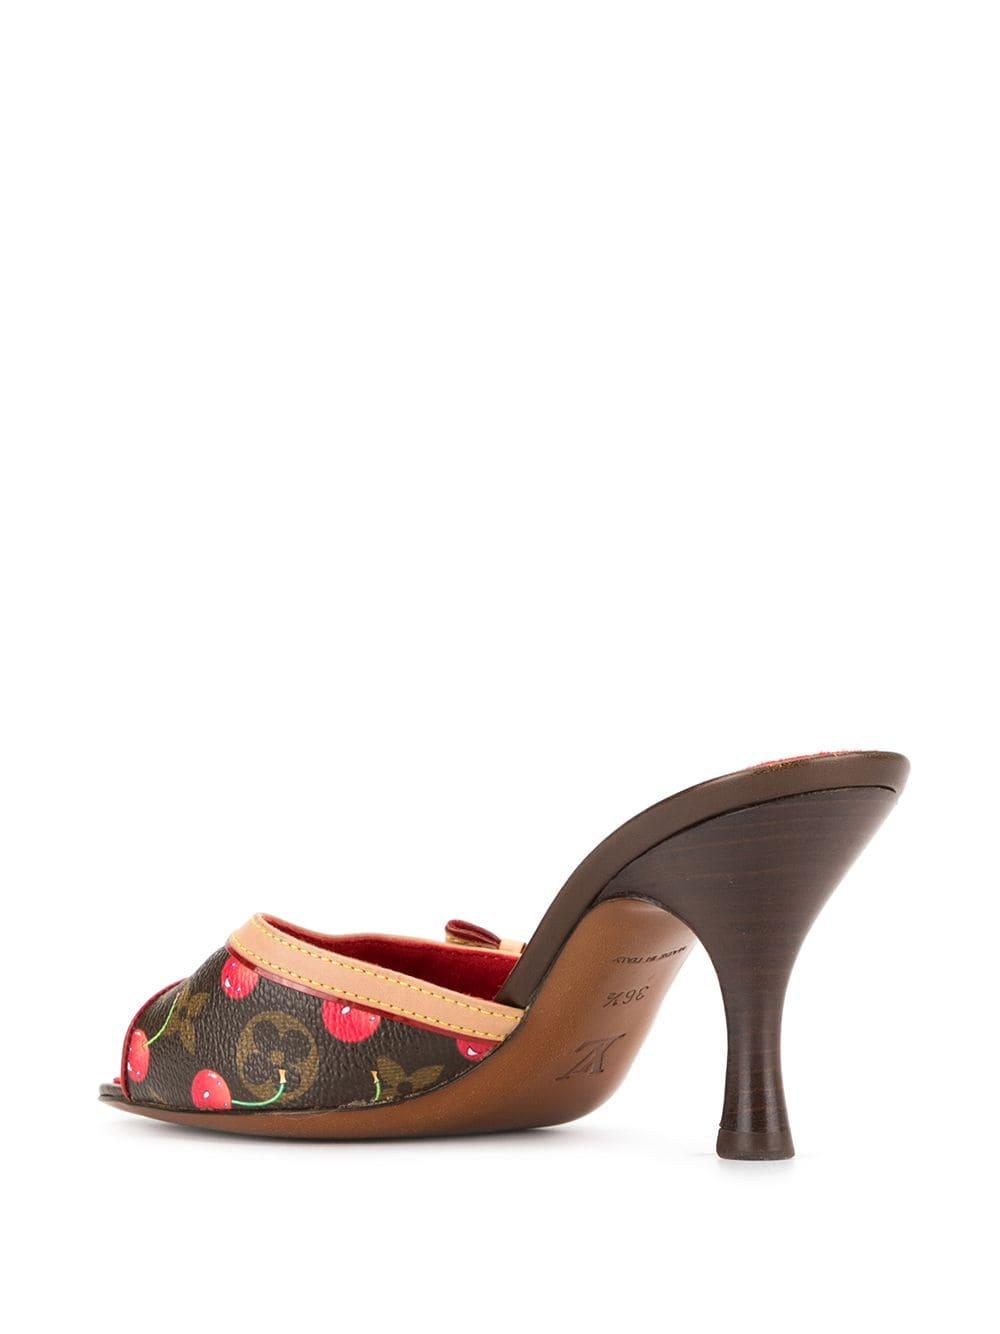 Louis Vuitton, Shoes, Louis Vuitton Takashi Murakami Cherry Slides